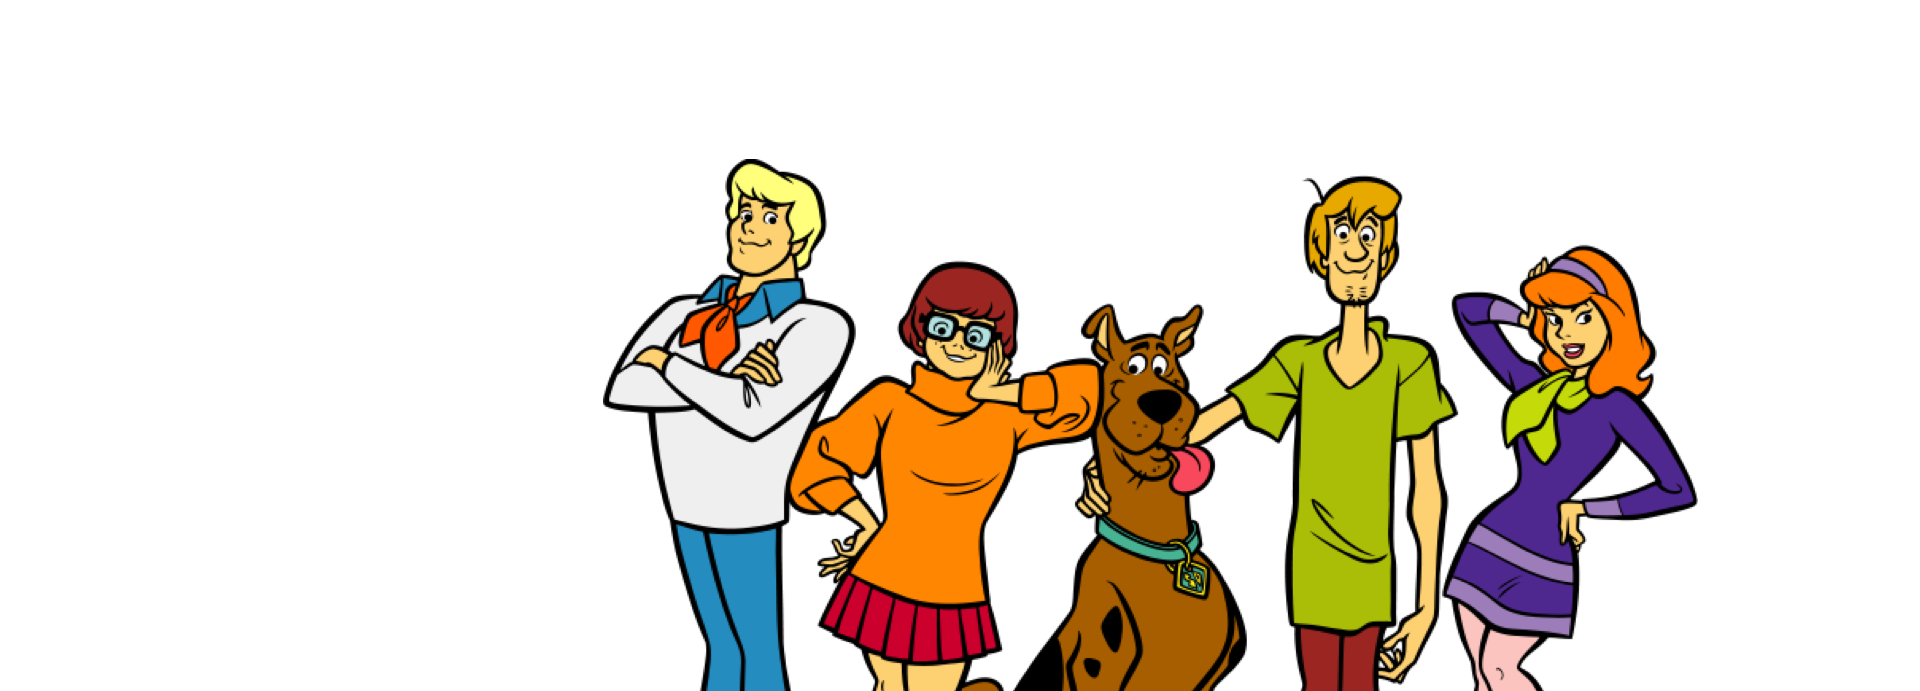 Play Scooby Doo Games Free Online Scooby Doo Games.